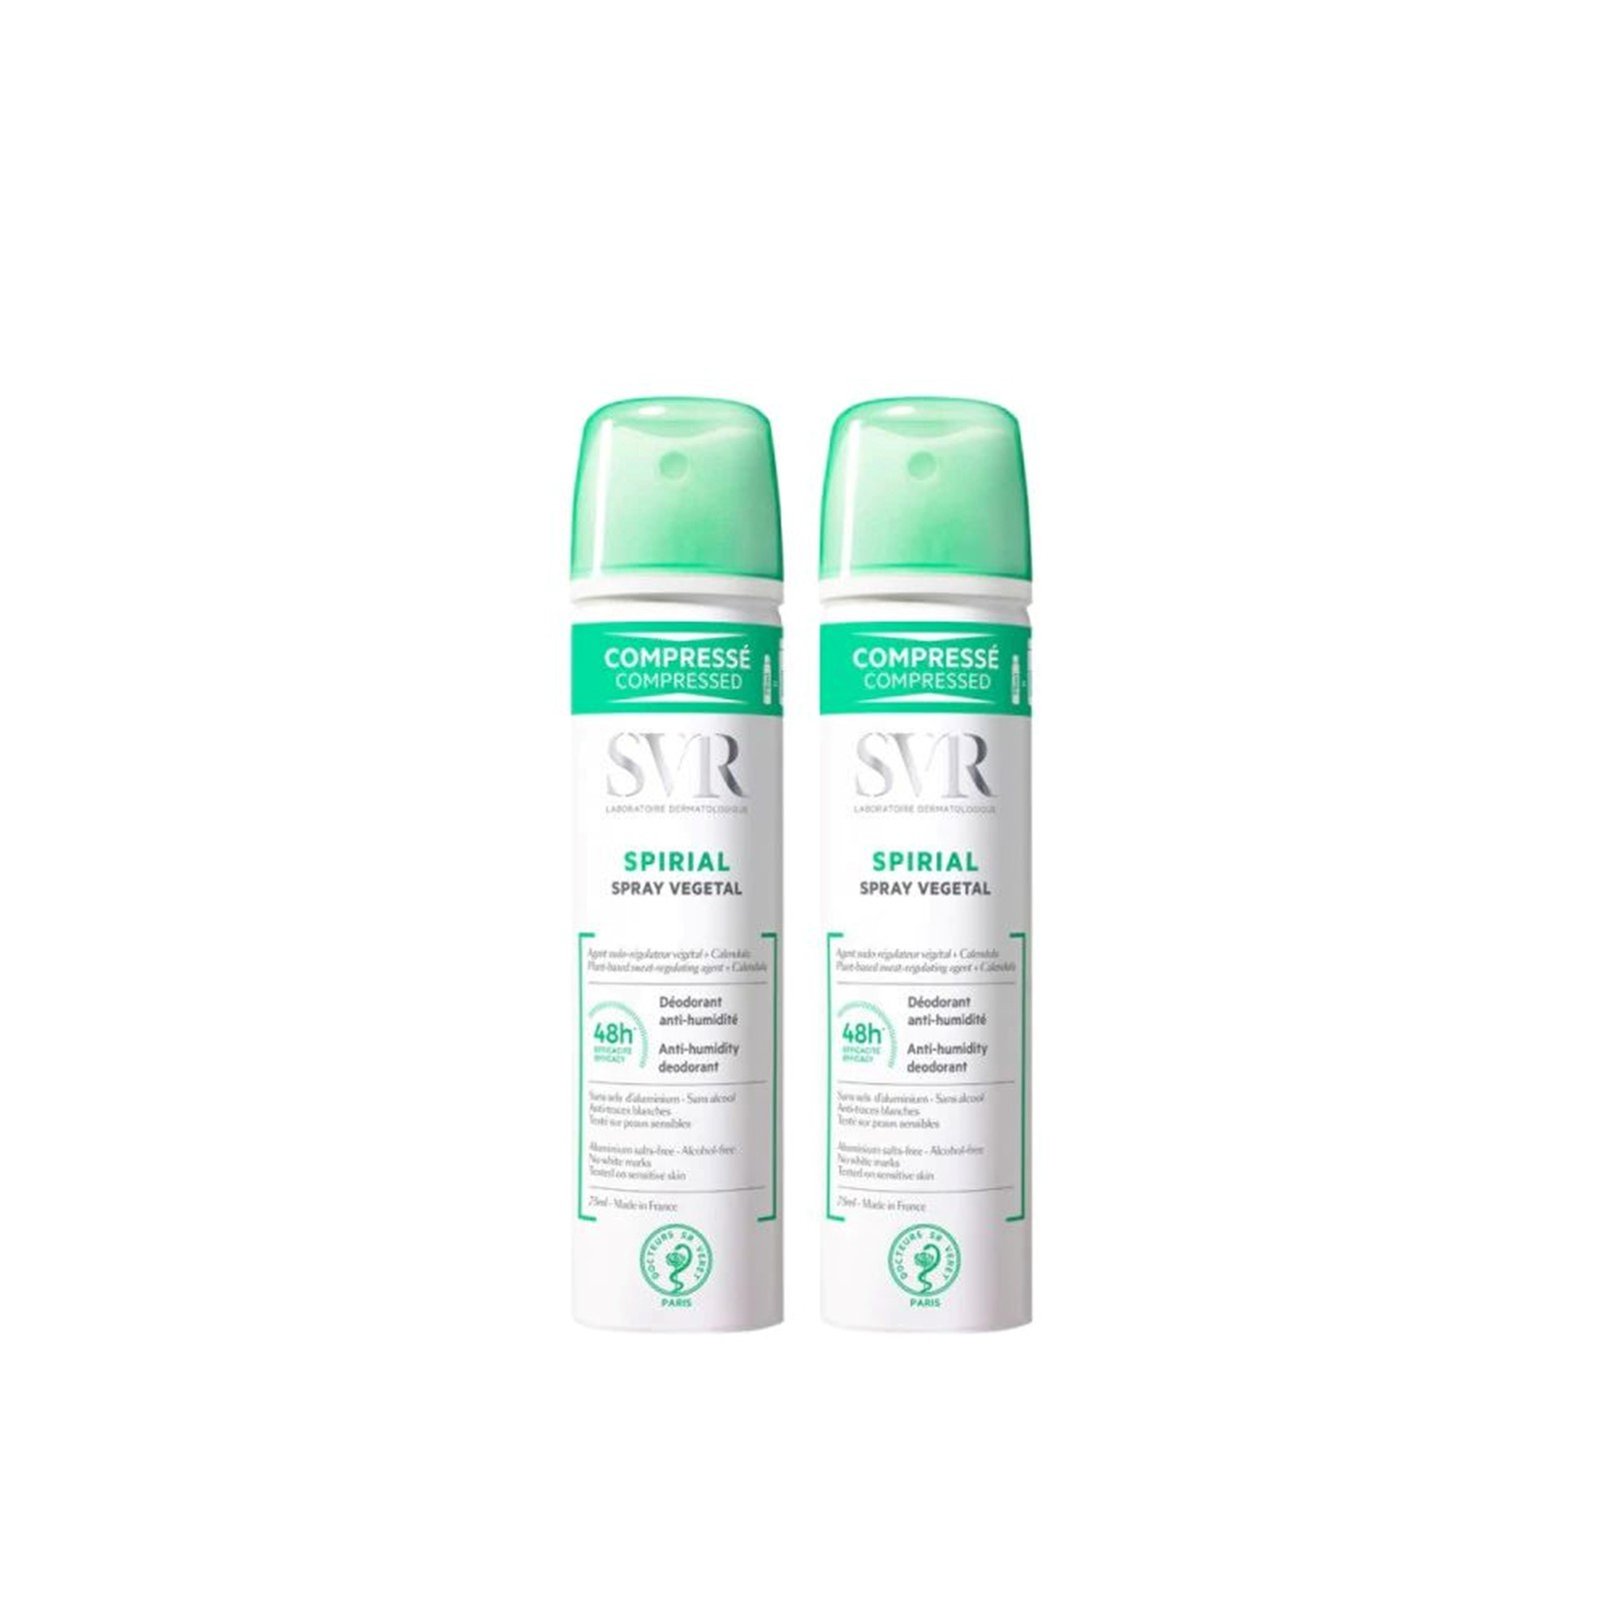 SVR Spirial 48h Vegetal Anti-Humidity Deodorant Spray 75ml x2 (2x2.54 fl oz)